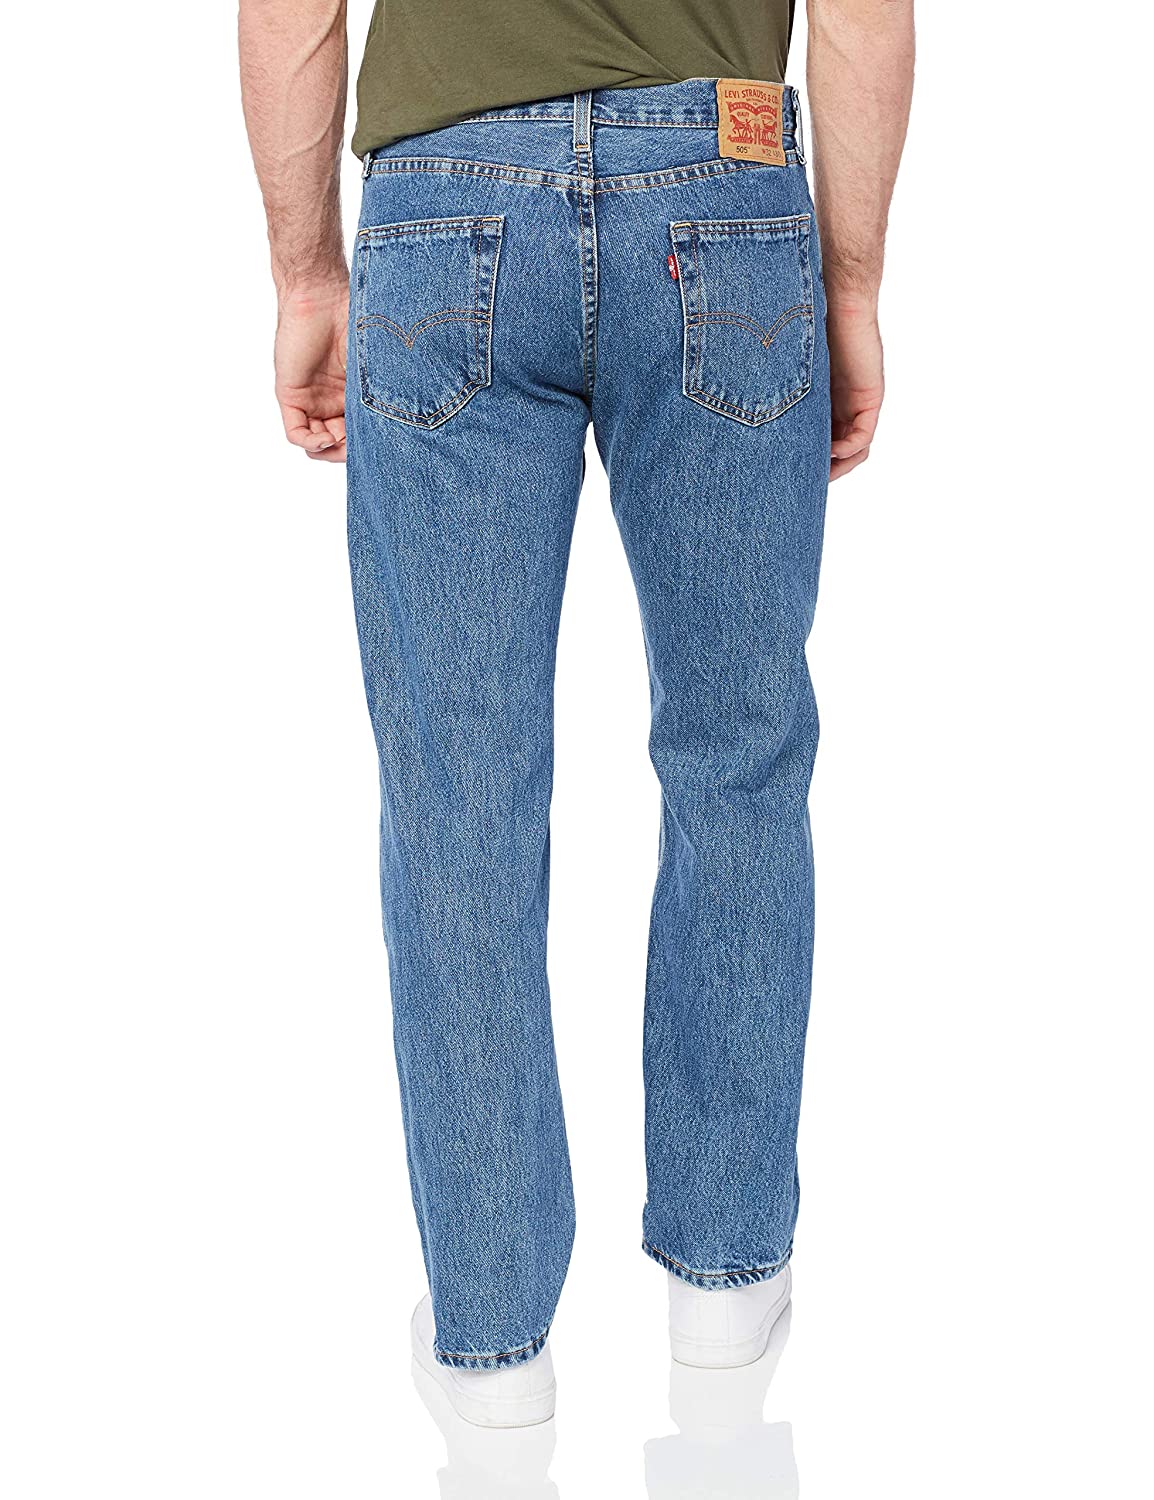 Levi's Men's 505 Regular Fit Jean, Dark, Medium Stonewash, Size 34W x